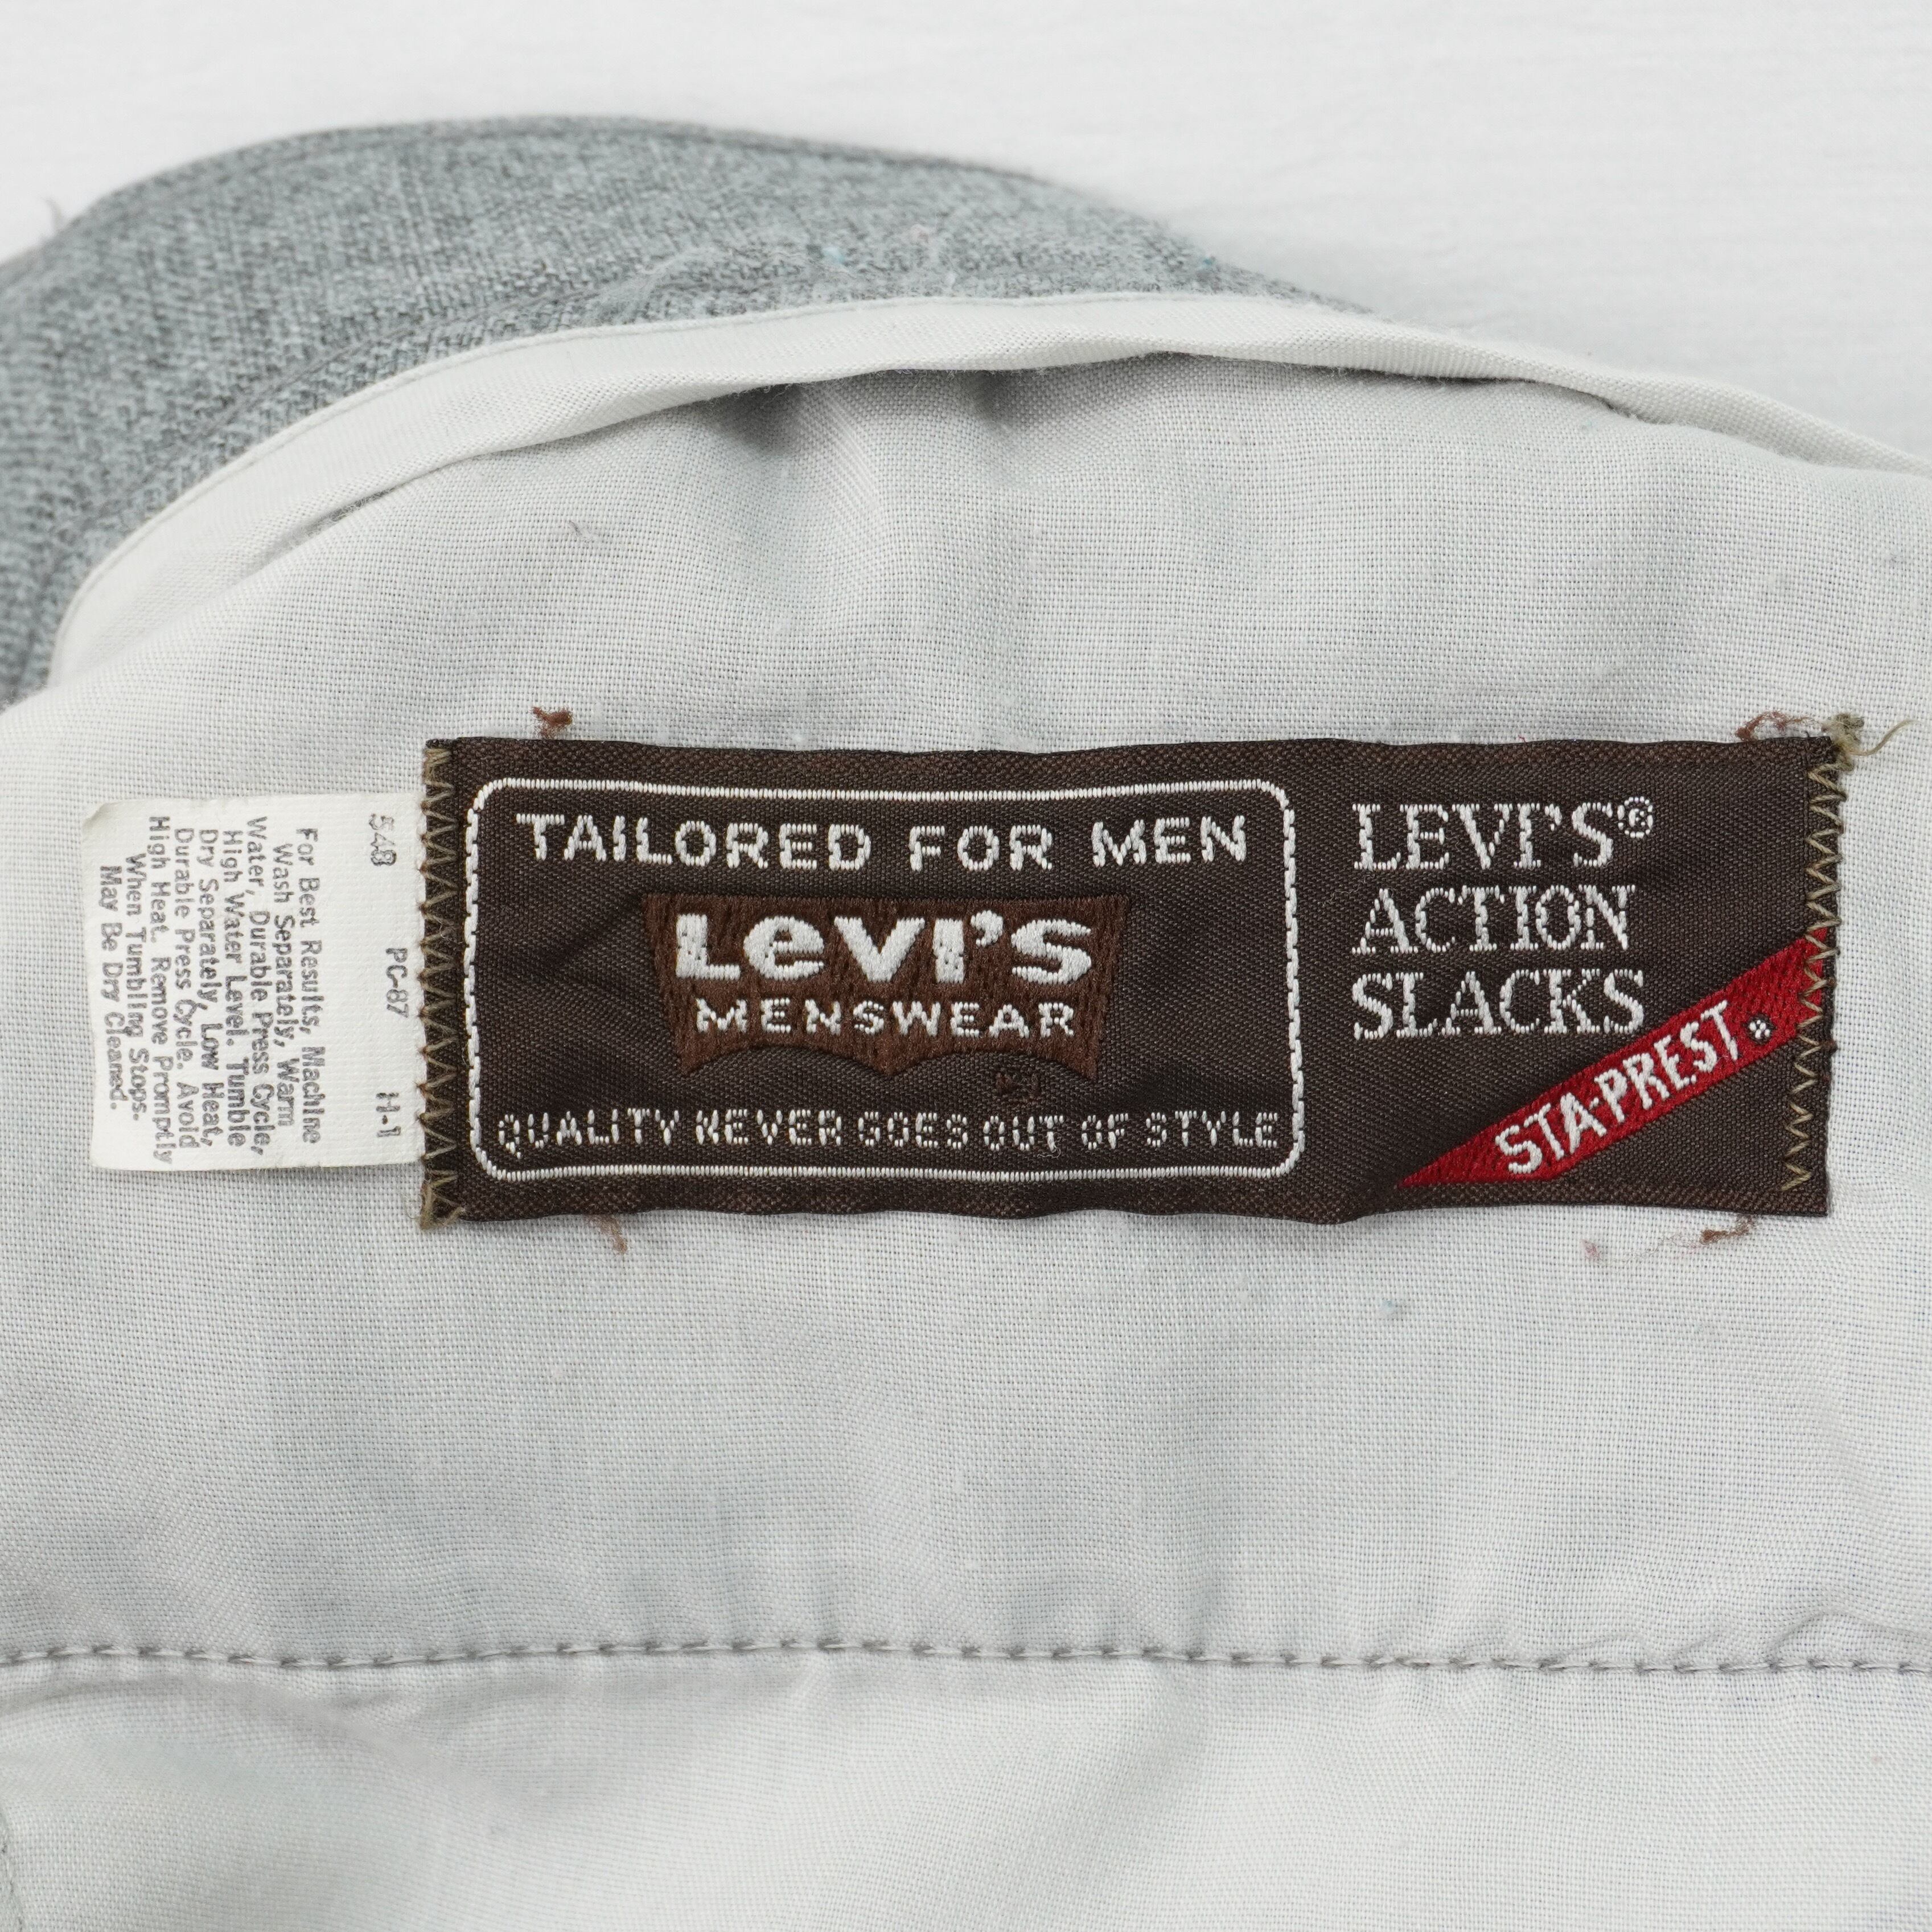 Levi's STA-PREST ACTION SLACKS GRAY 1980s W32 L31 | Loki Vintage&Used